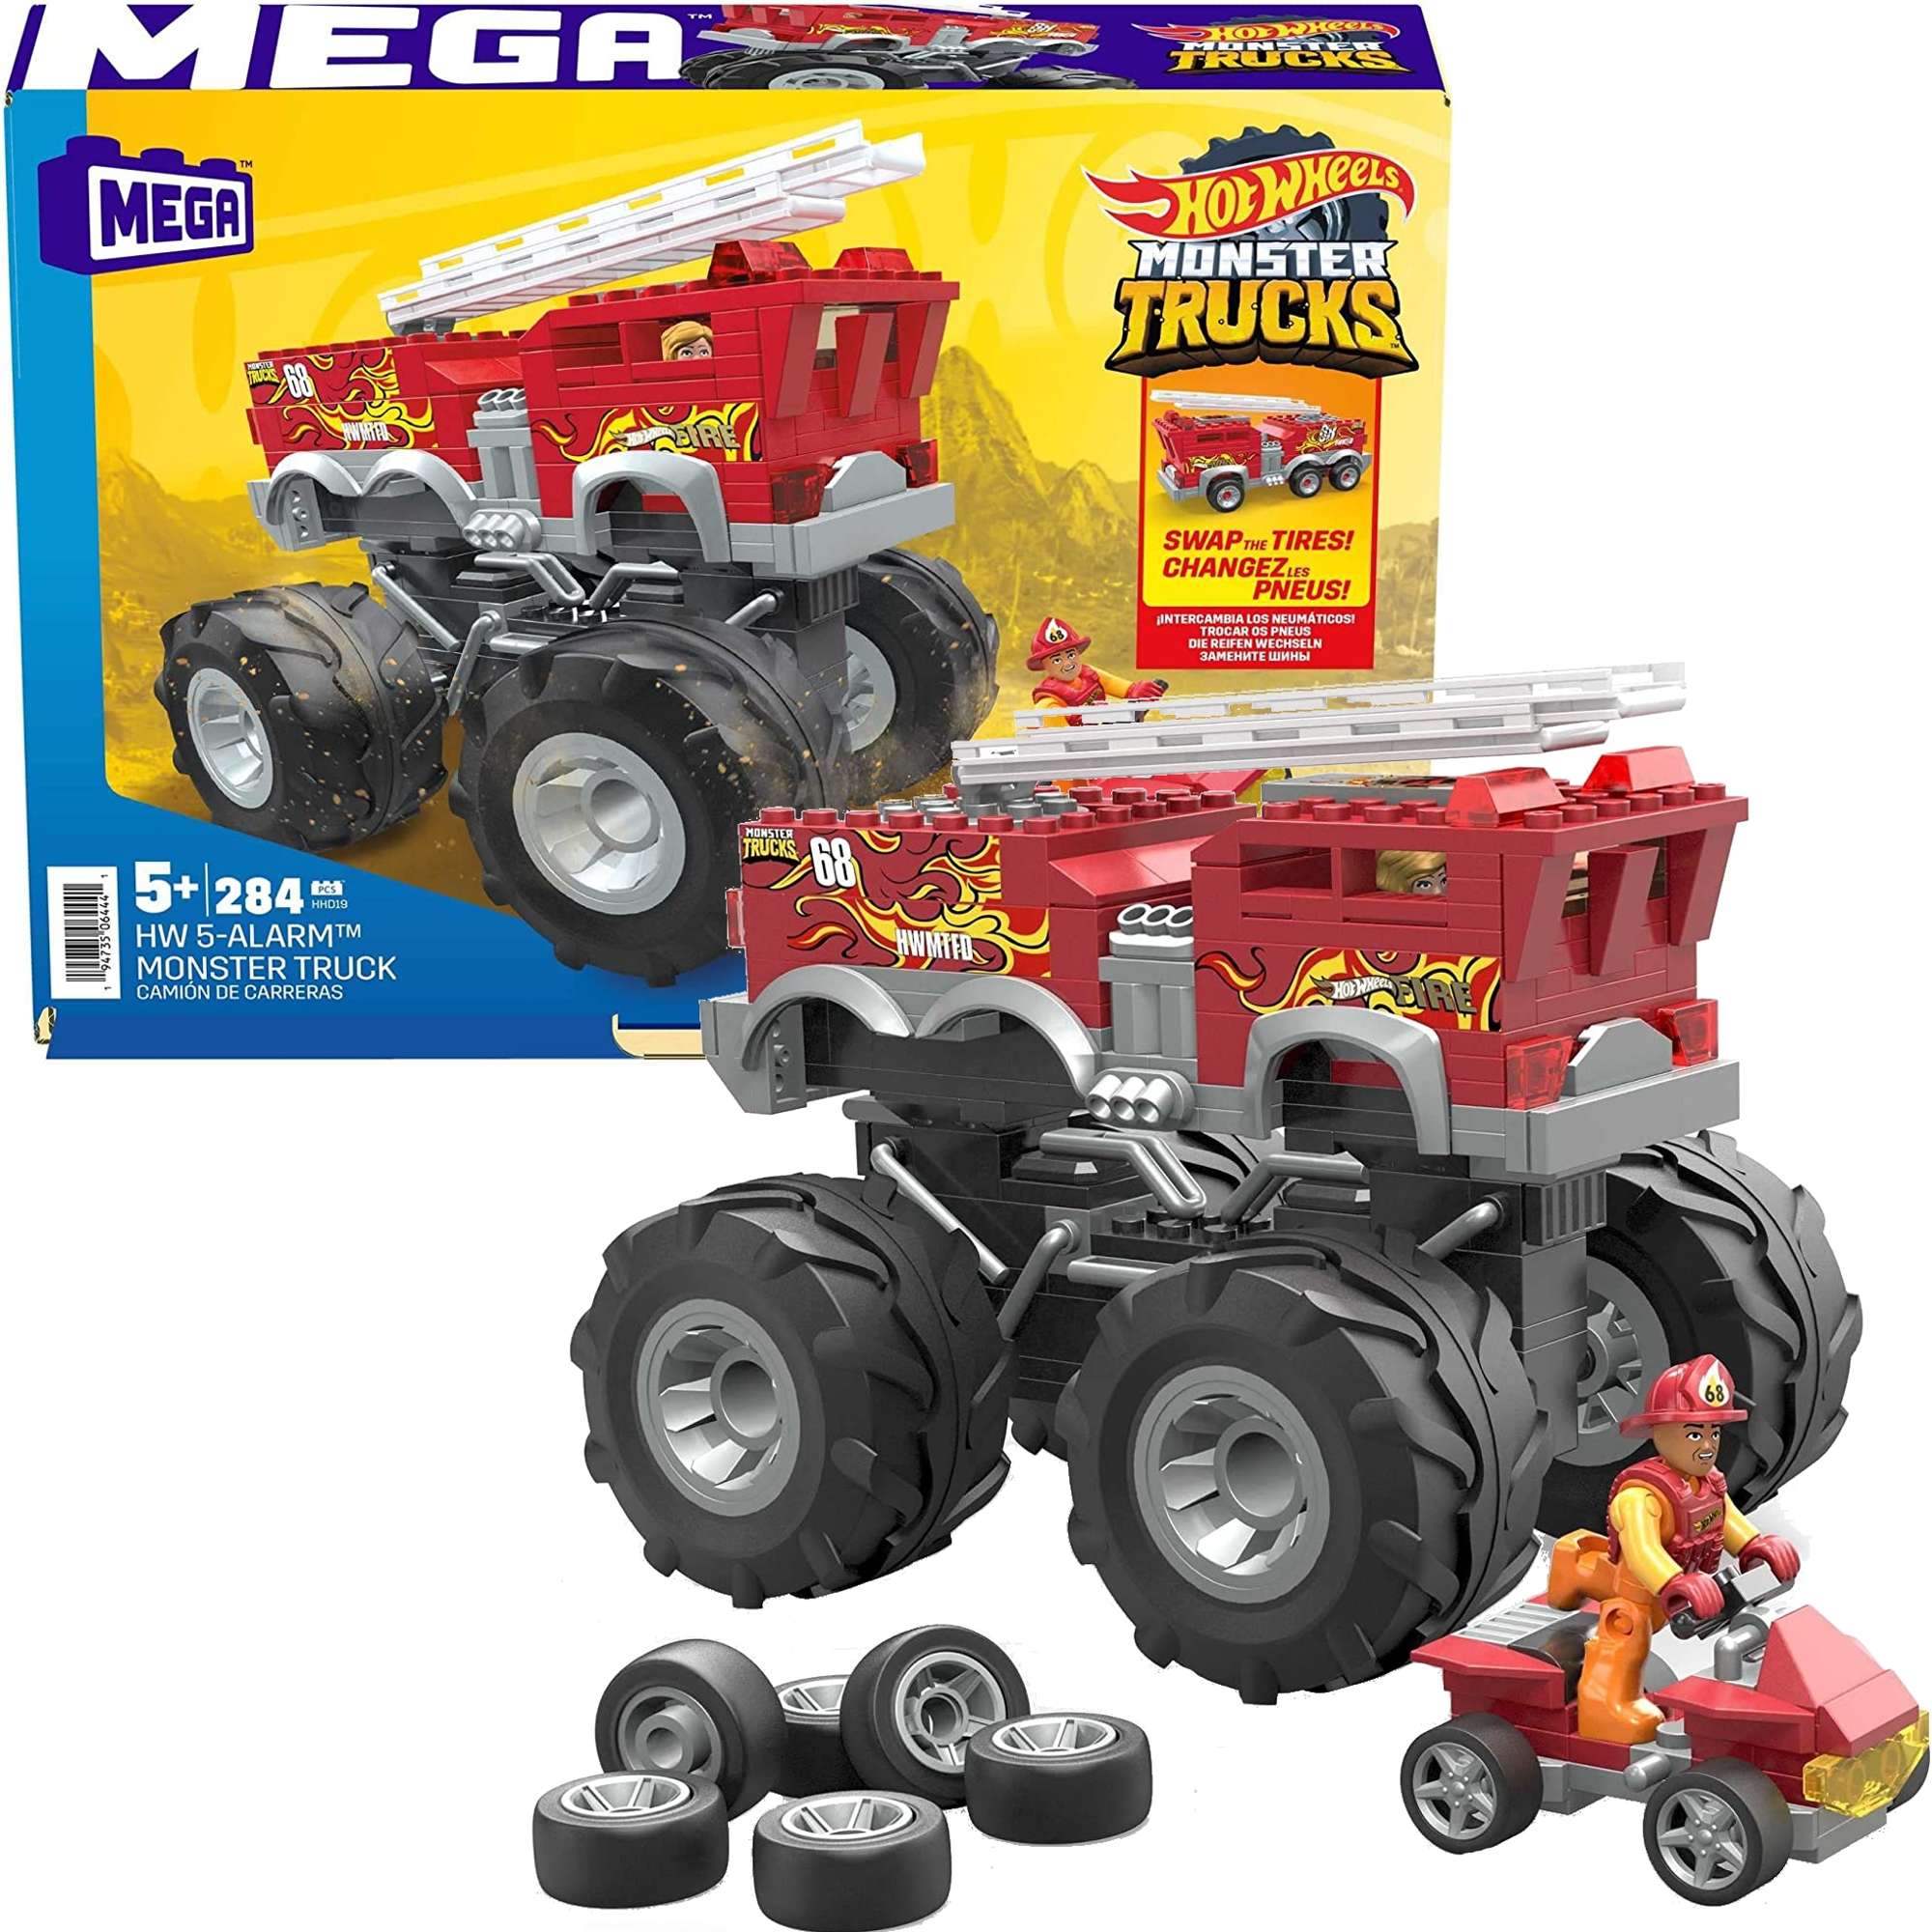 Mega Hot Wheels Monster Trucks zestaw klockw 284 elementw